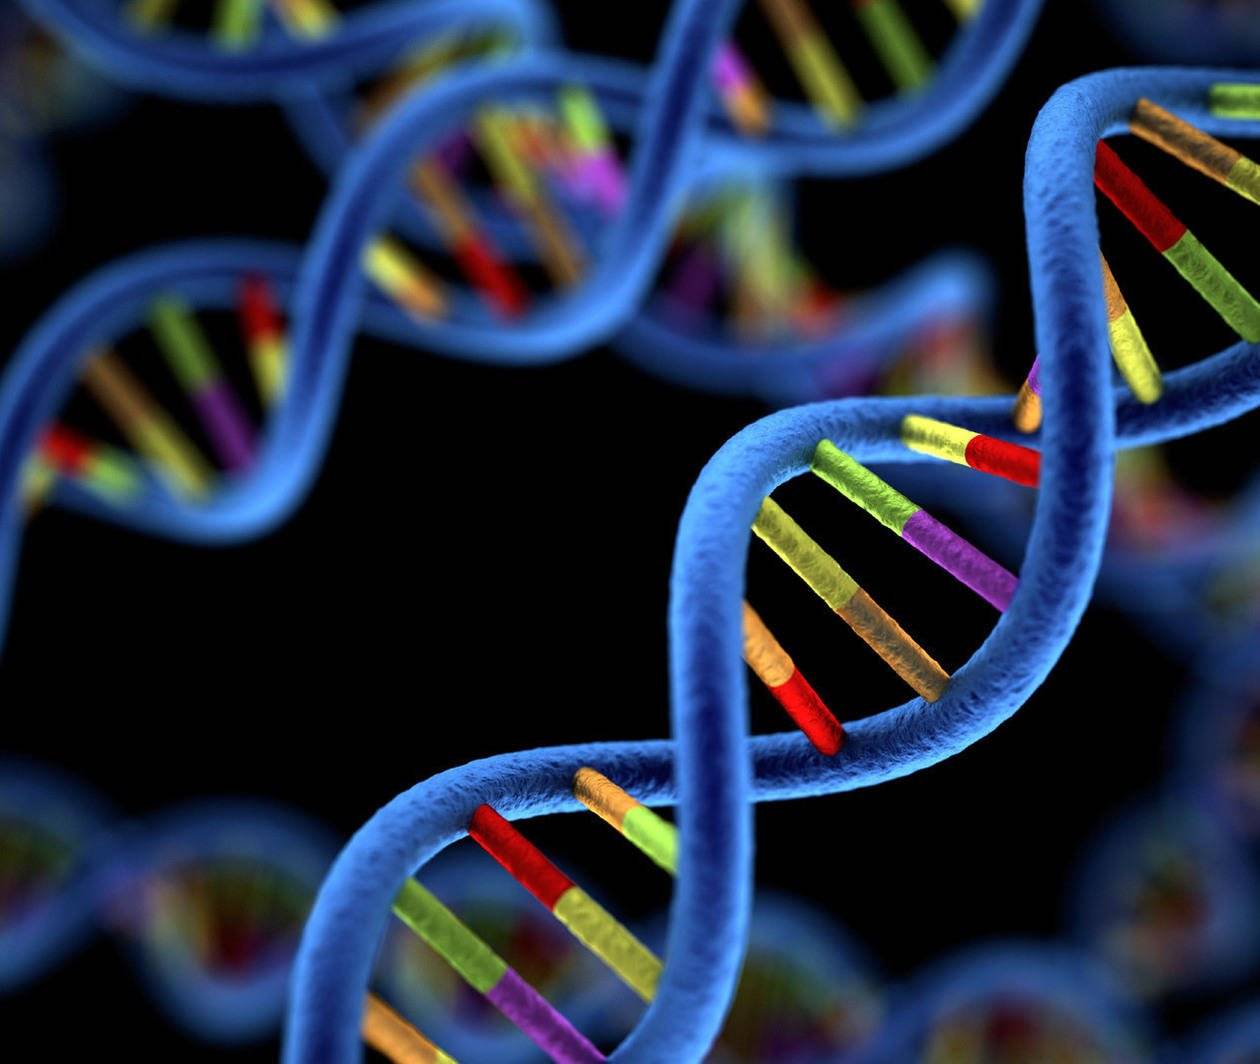 چگونه ژنتیک قبول شویم؟